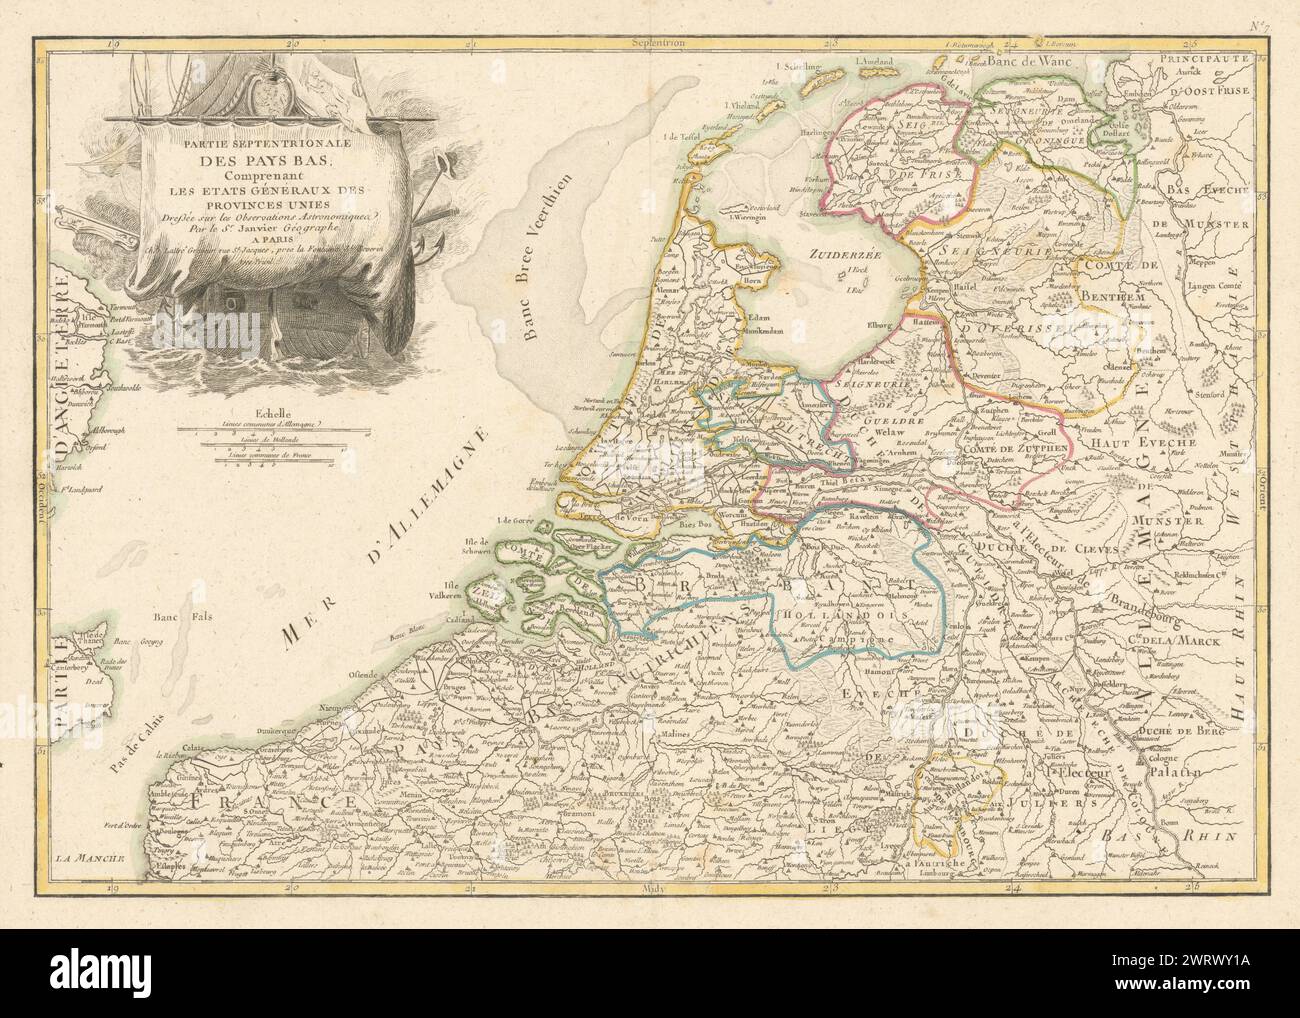 'Partie Septentrionale des Pays Bas'. Netherlands. Jean Janvier c1762 old map Stock Photo